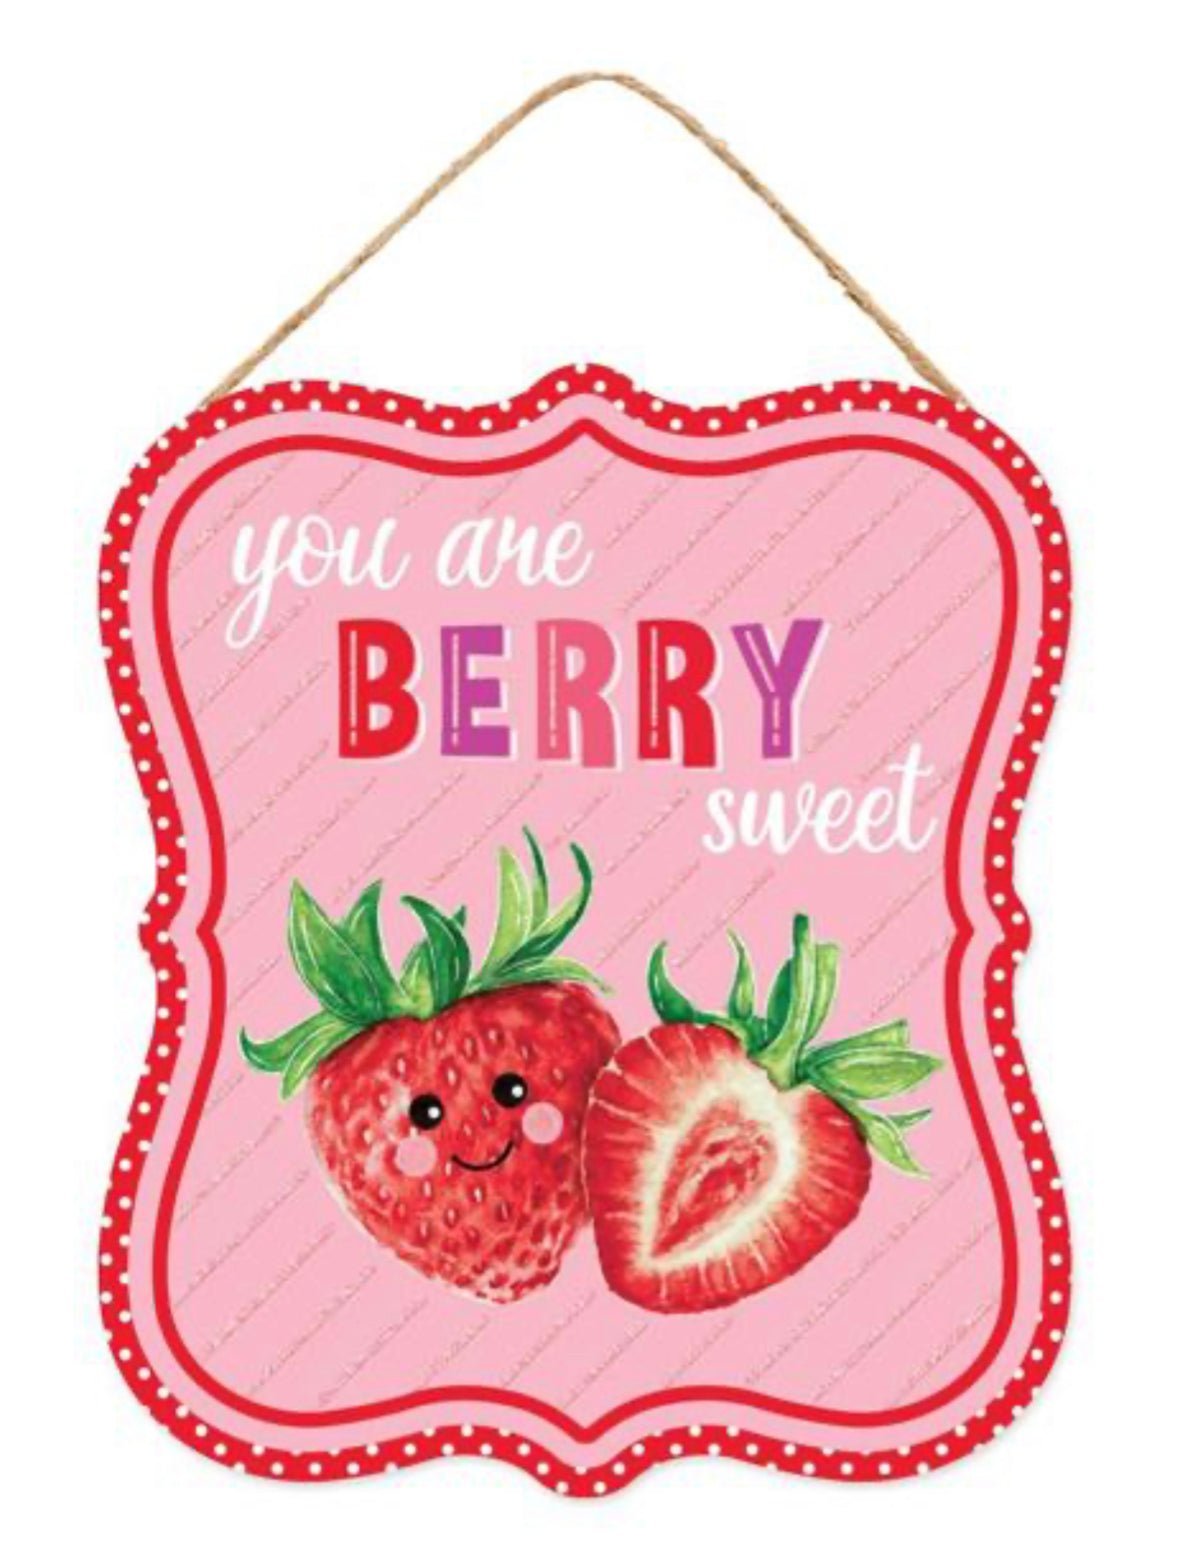 Very sweet strawberry summer sign - Greenery Marketsigns for wreathsAP7852